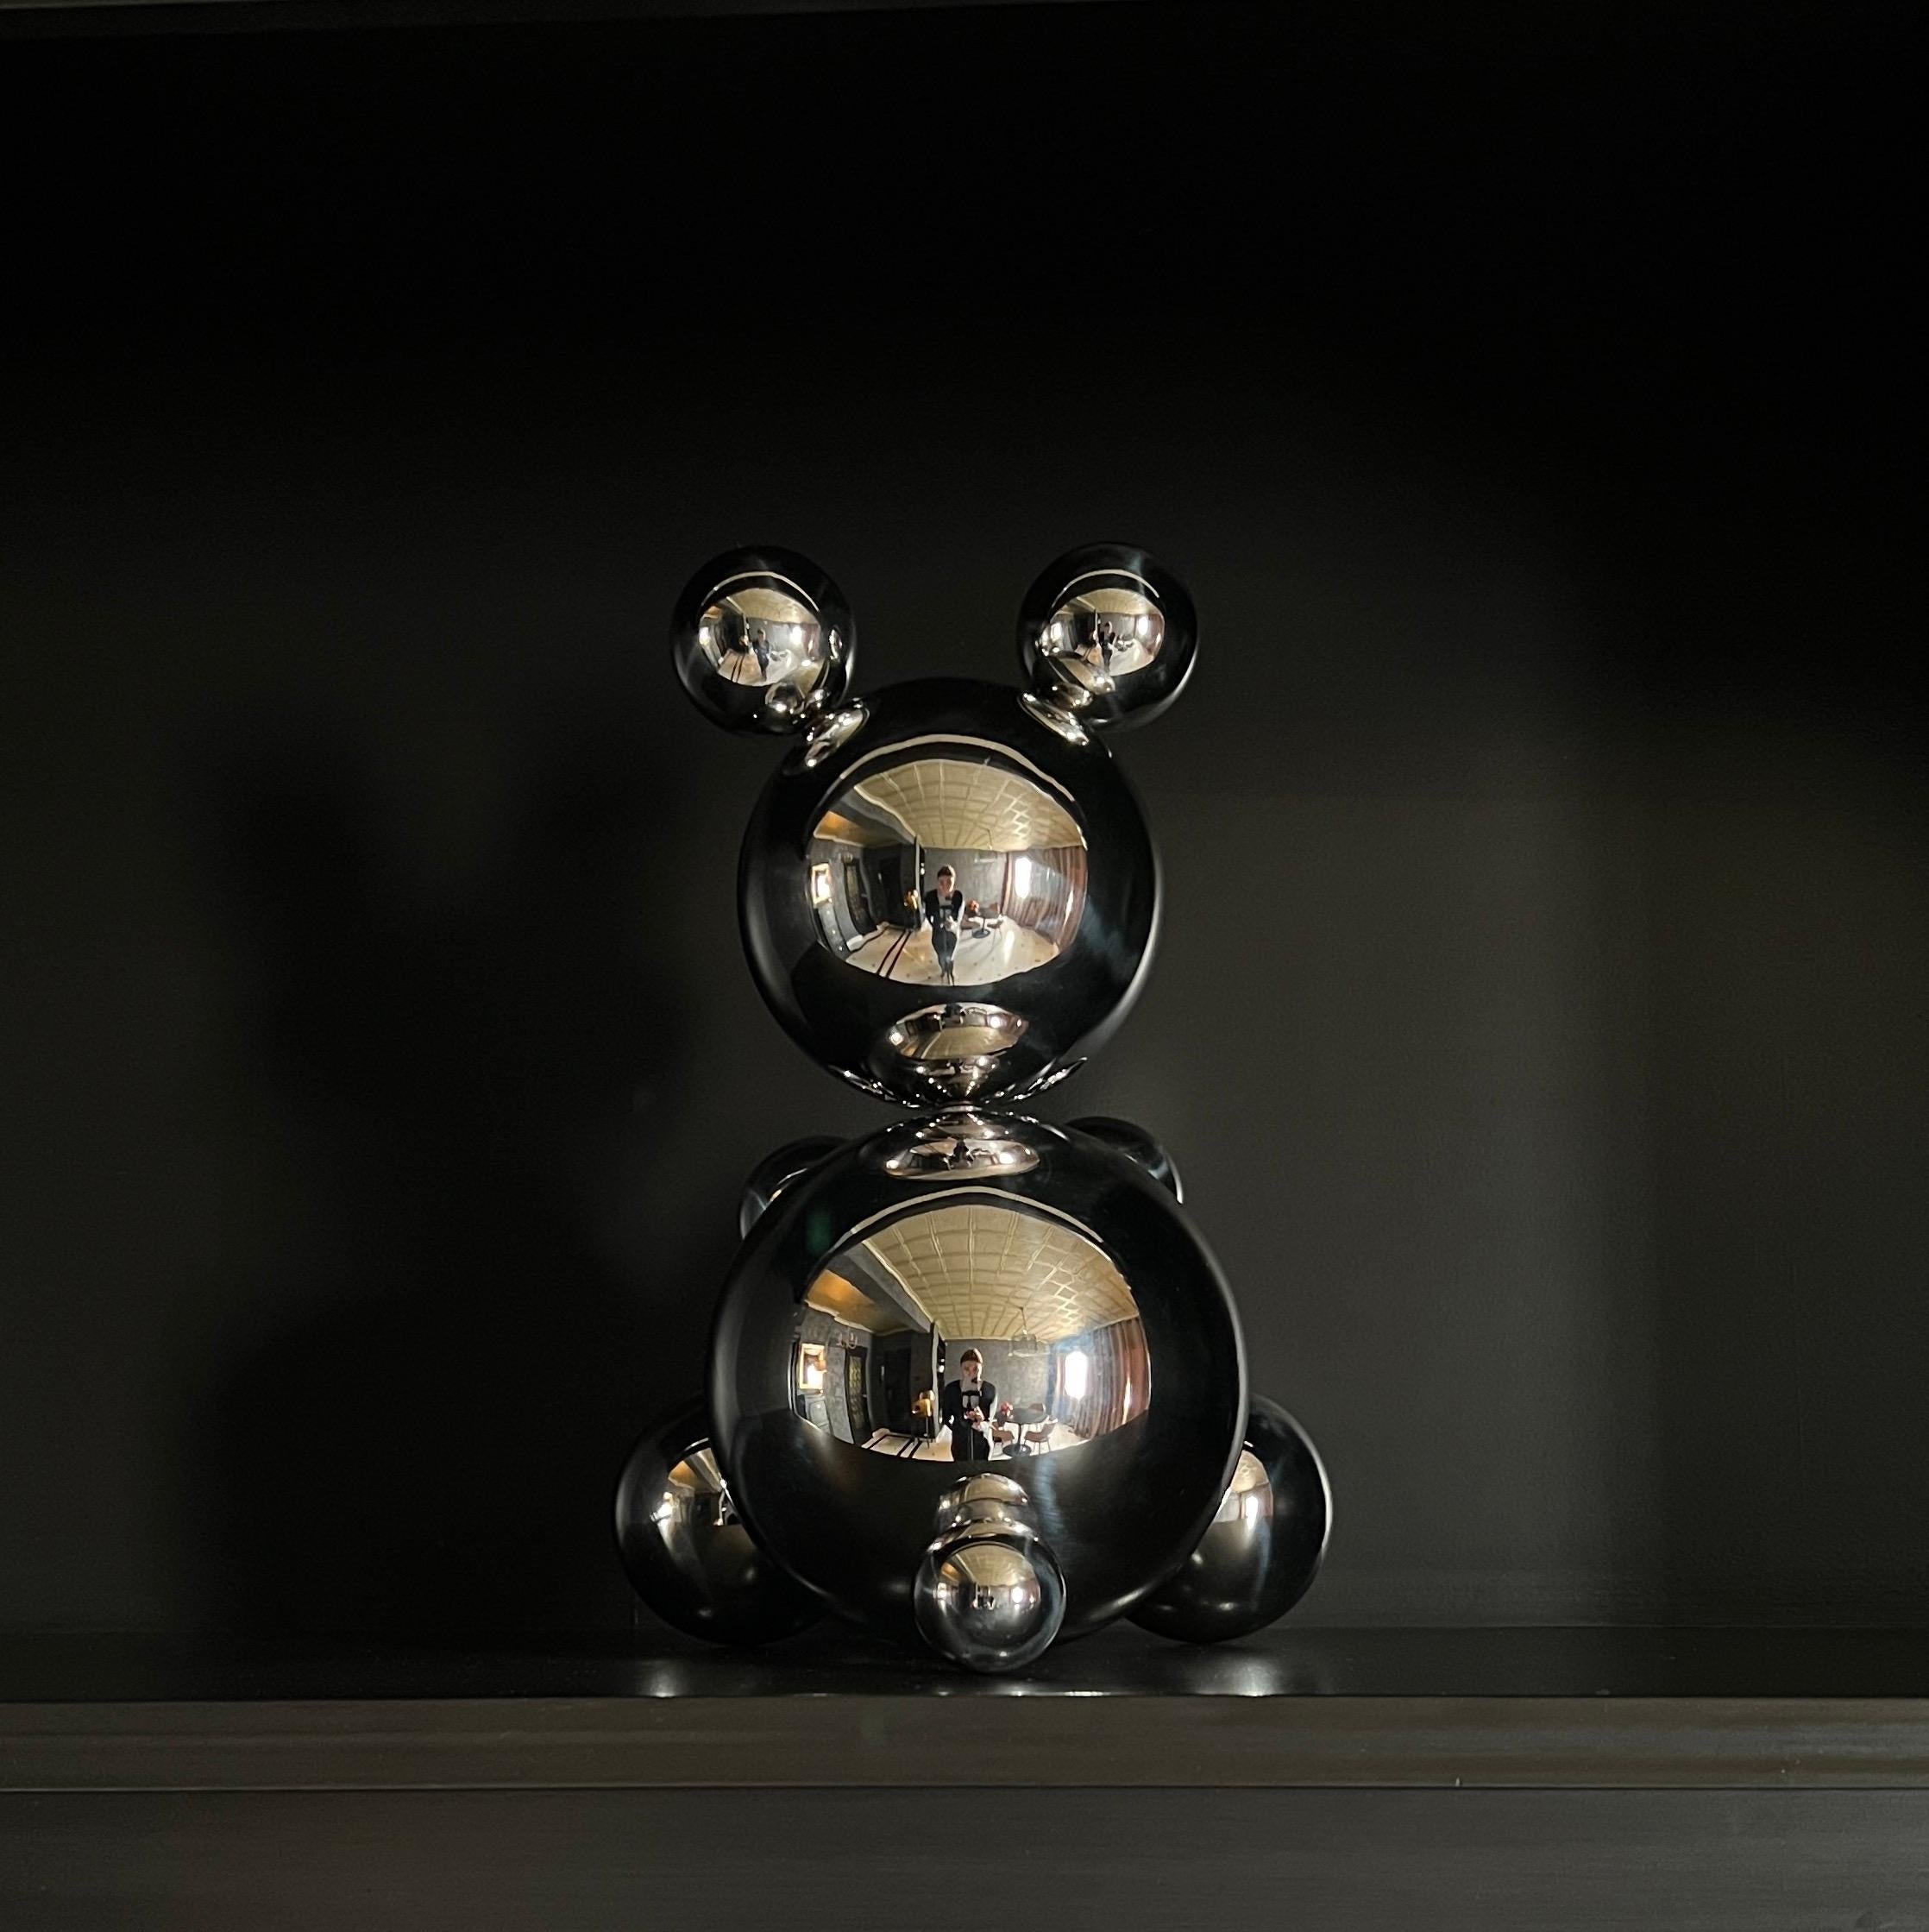 Middle Stainless Steel Bear 'Felix' Sculpture Minimalistic Animal 1